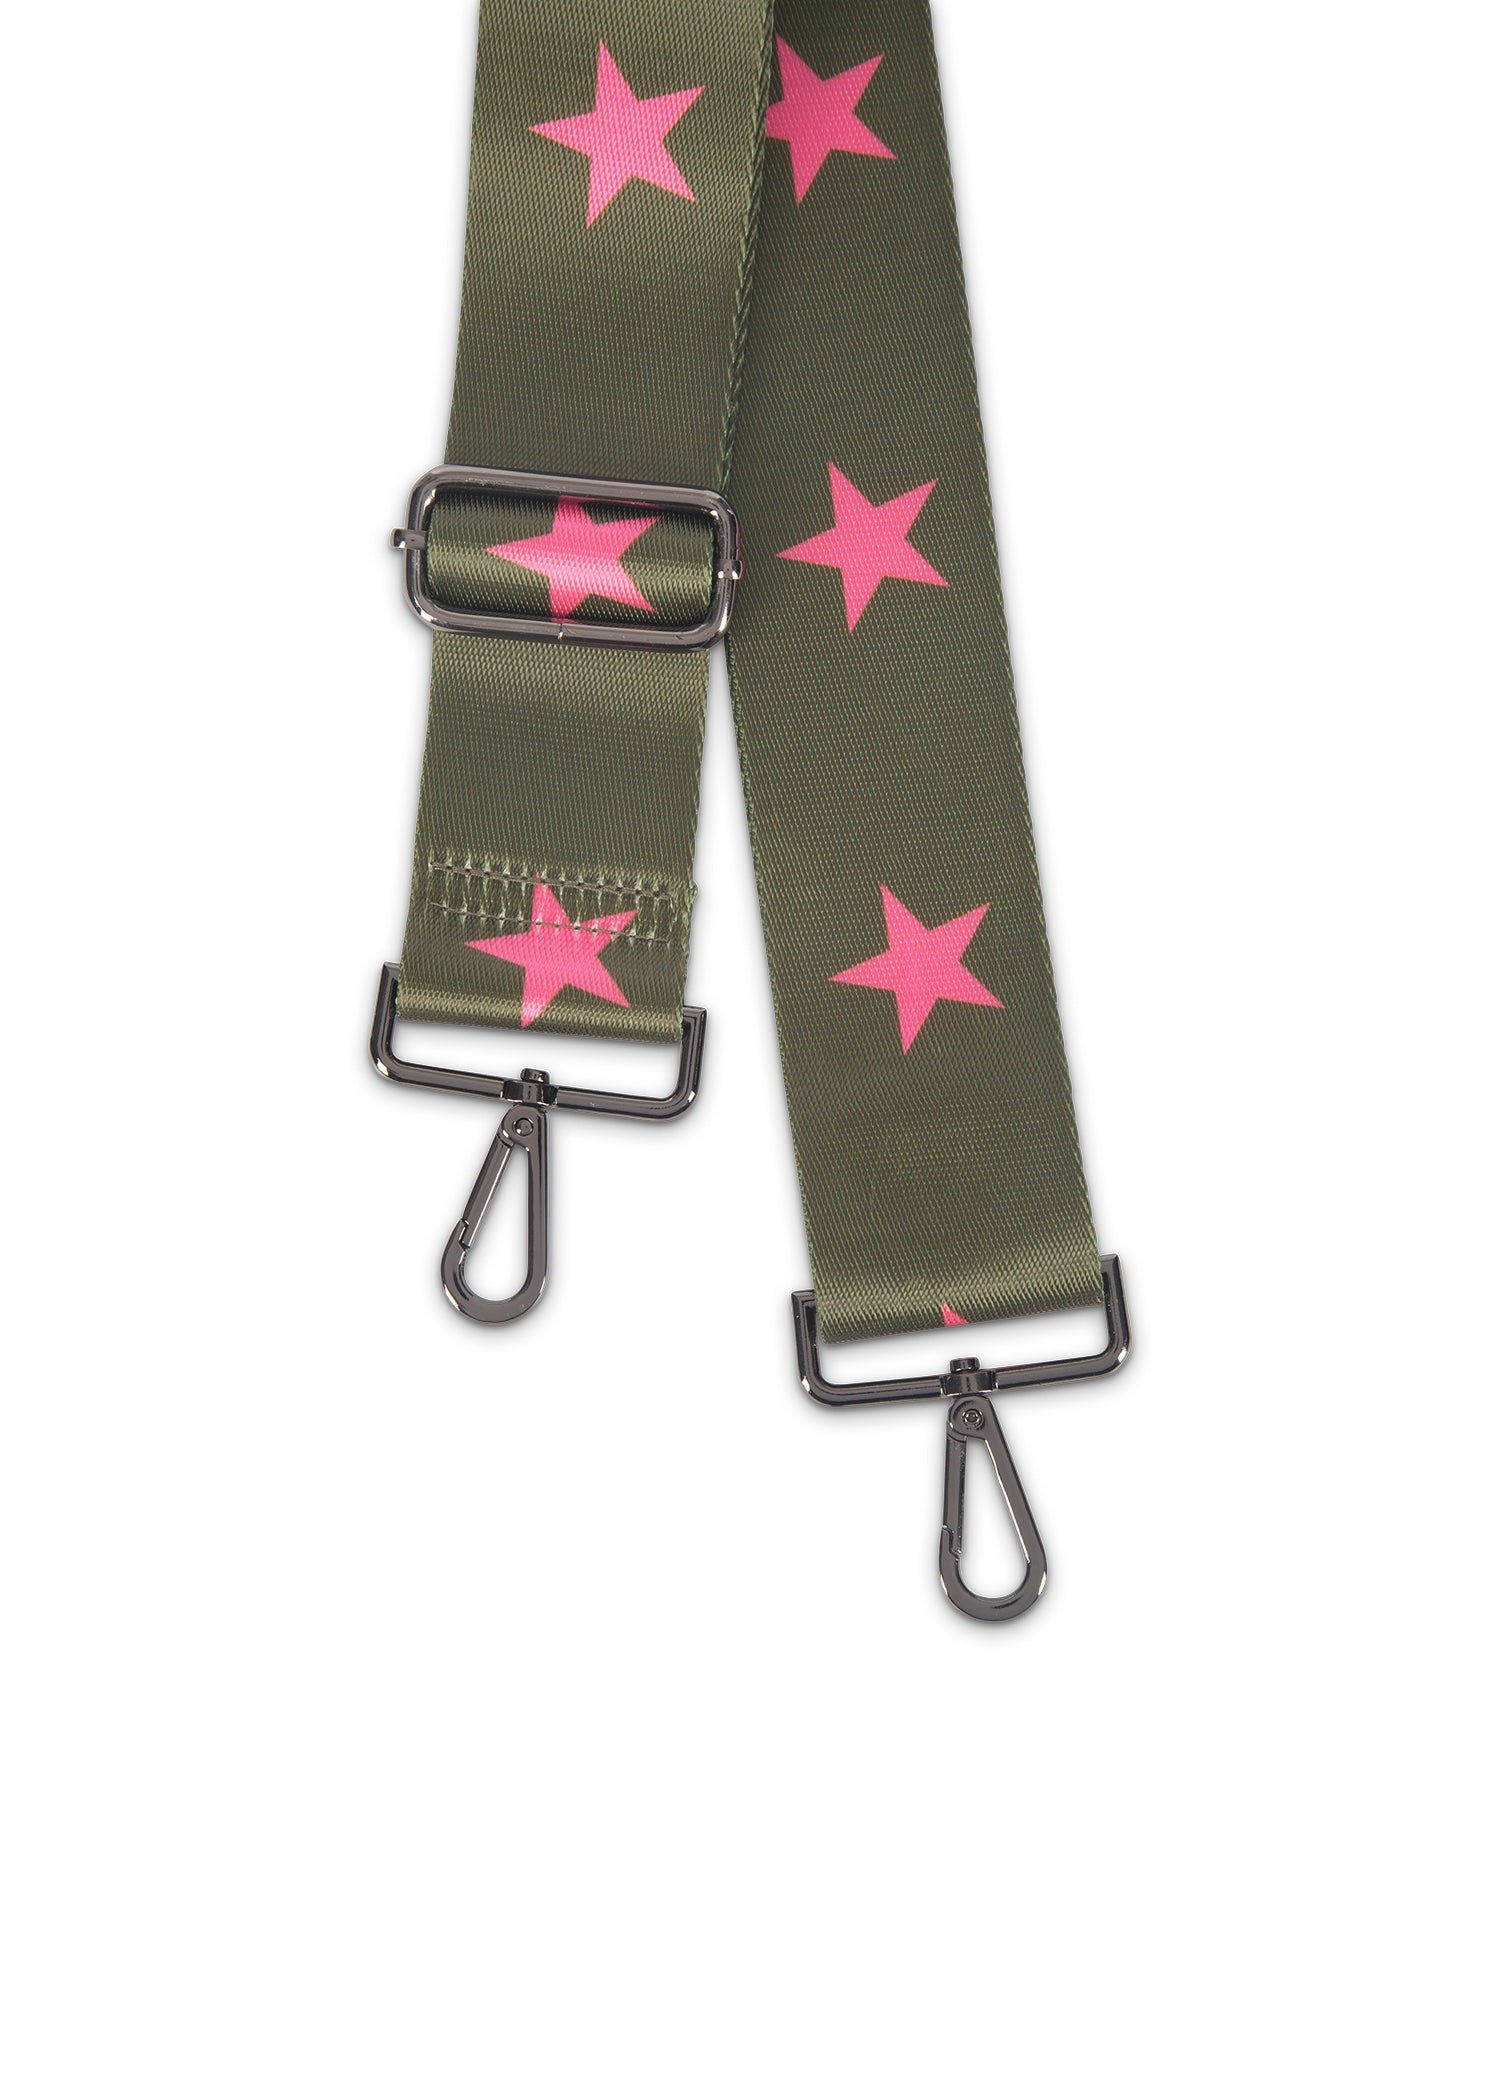 olive/pink star handbag strap